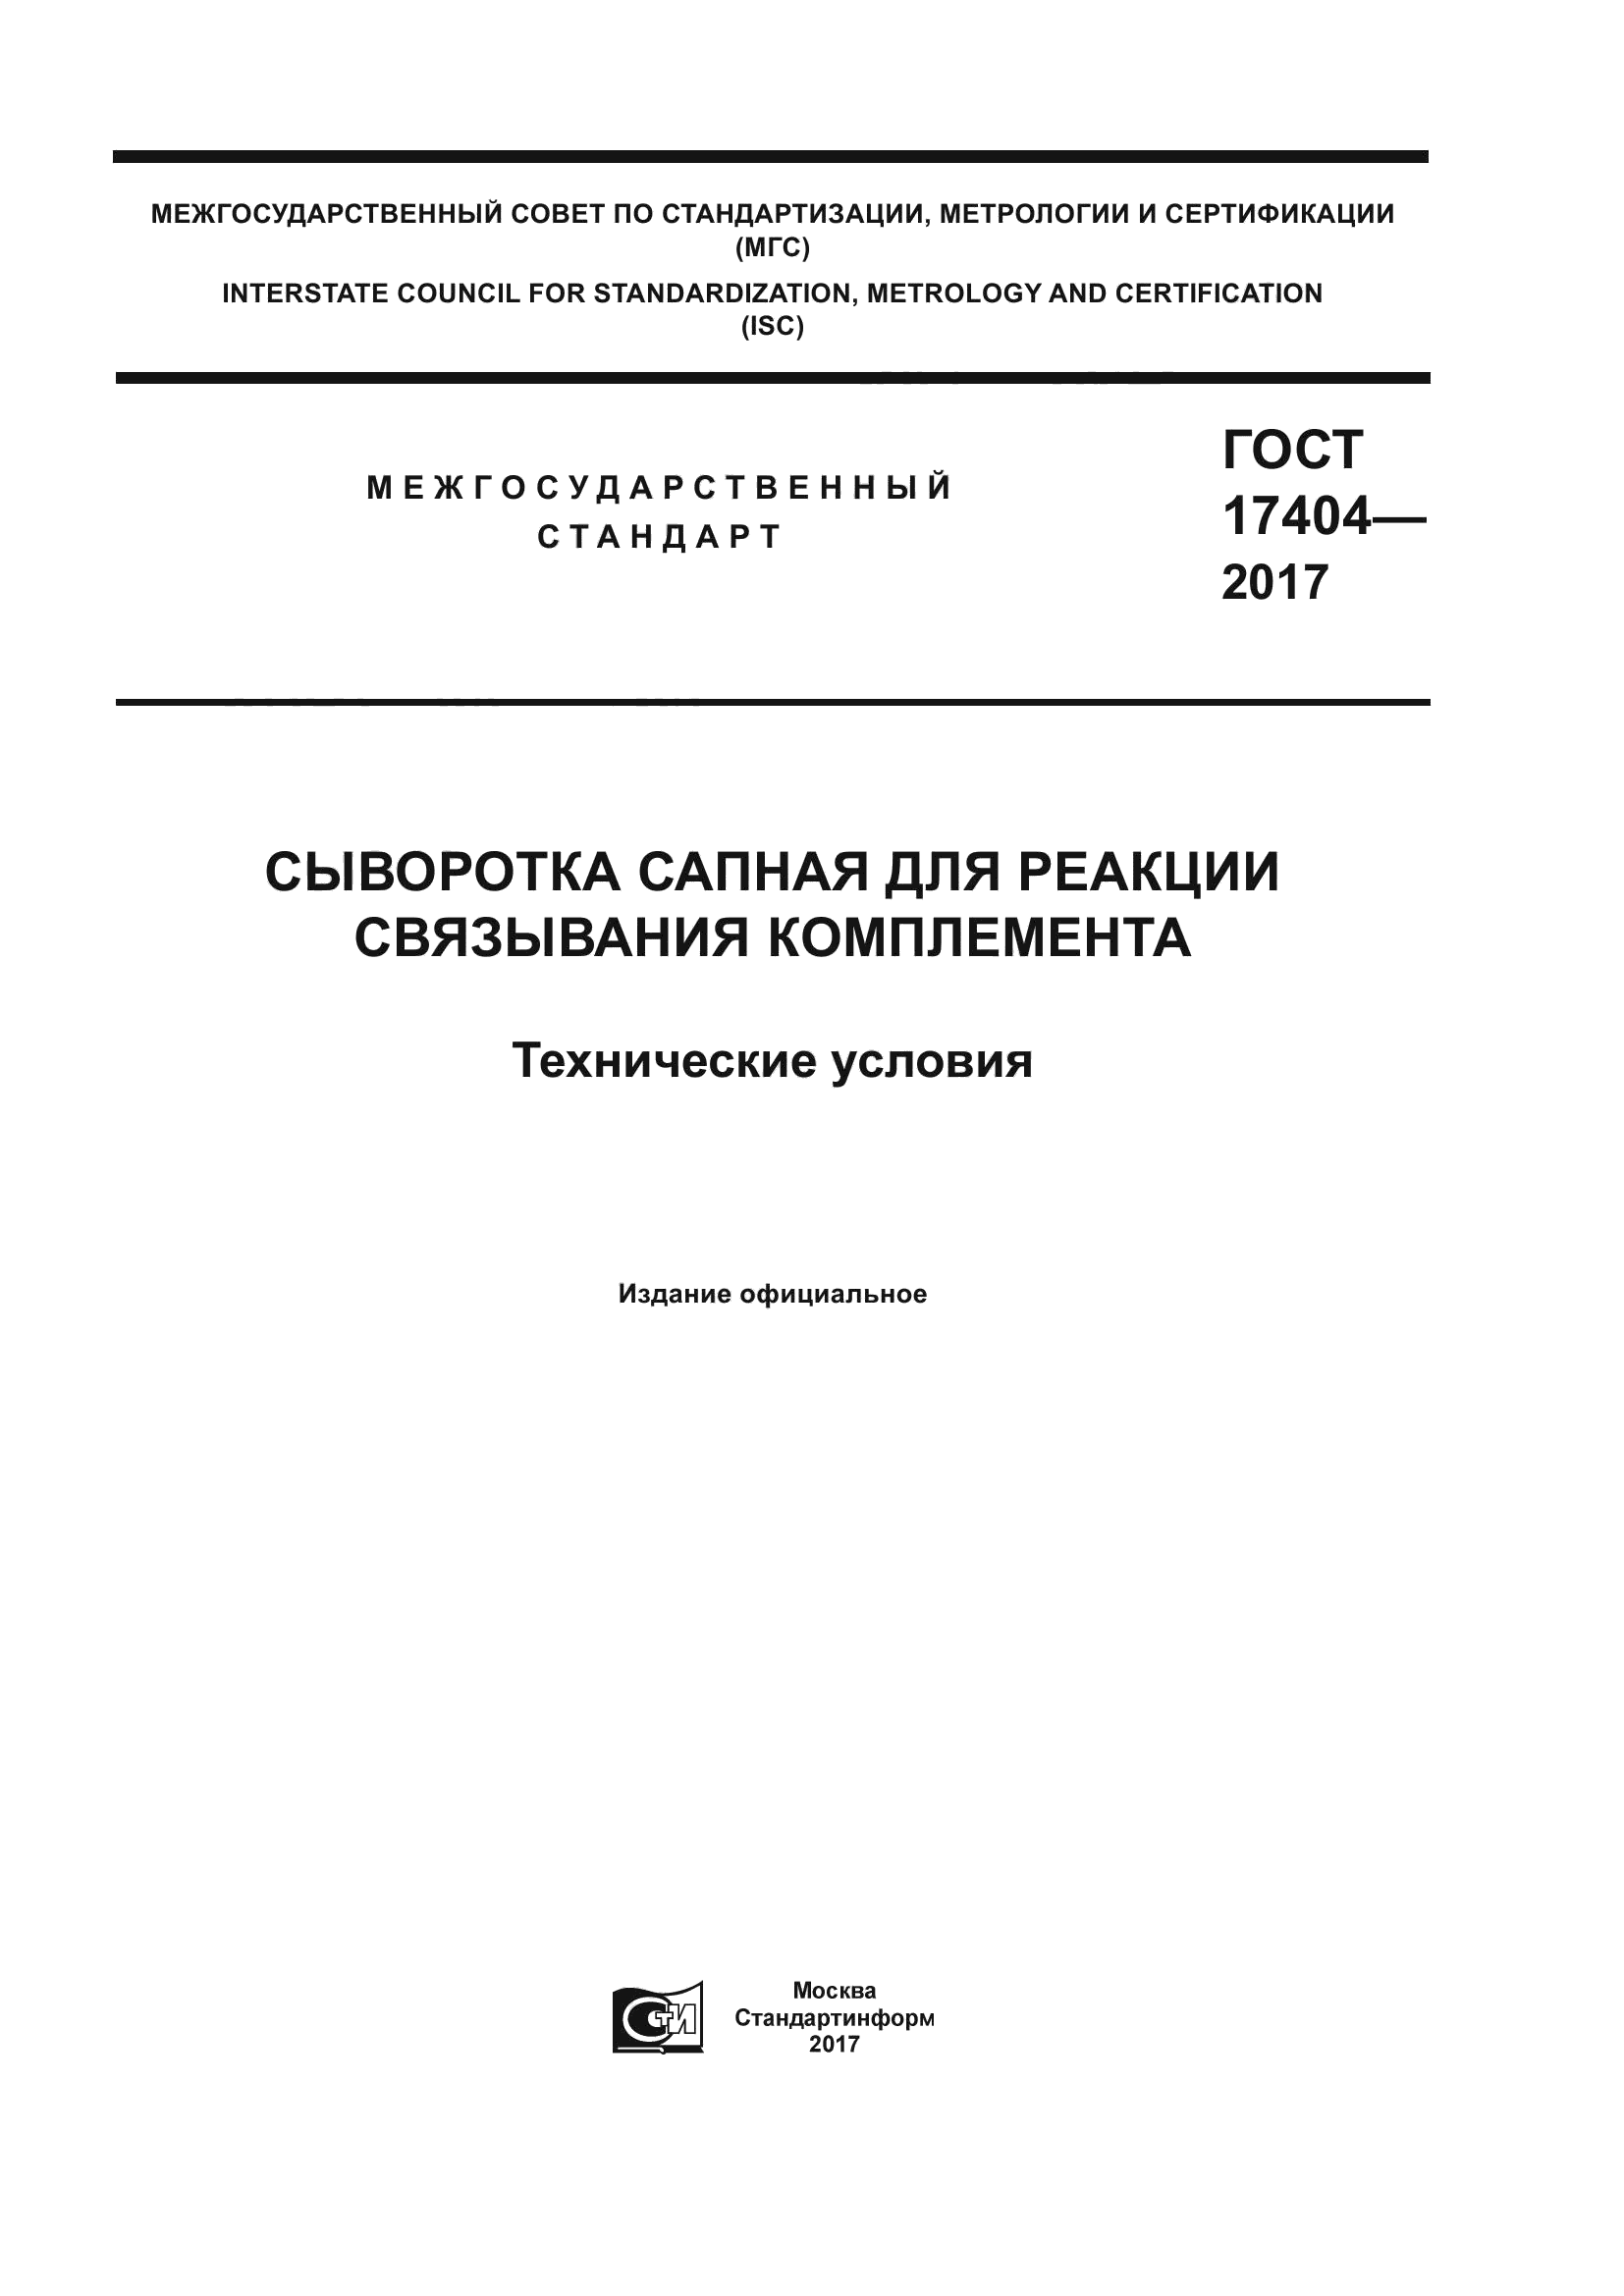 ГОСТ 17404-2017